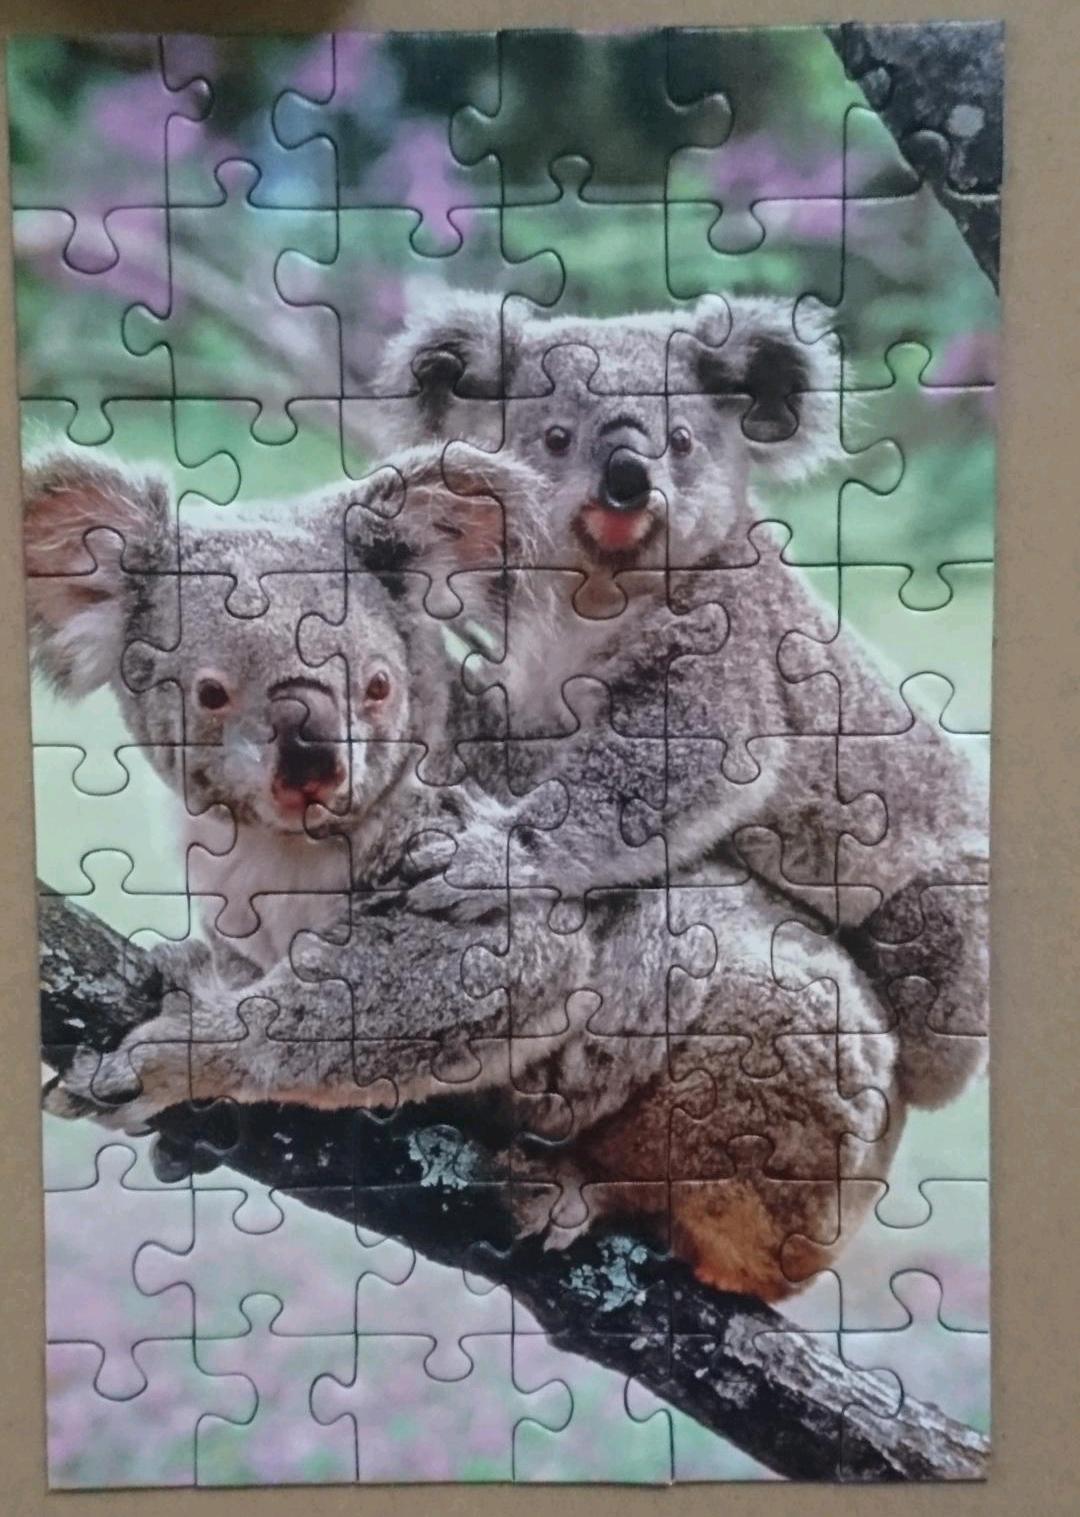 Koalas